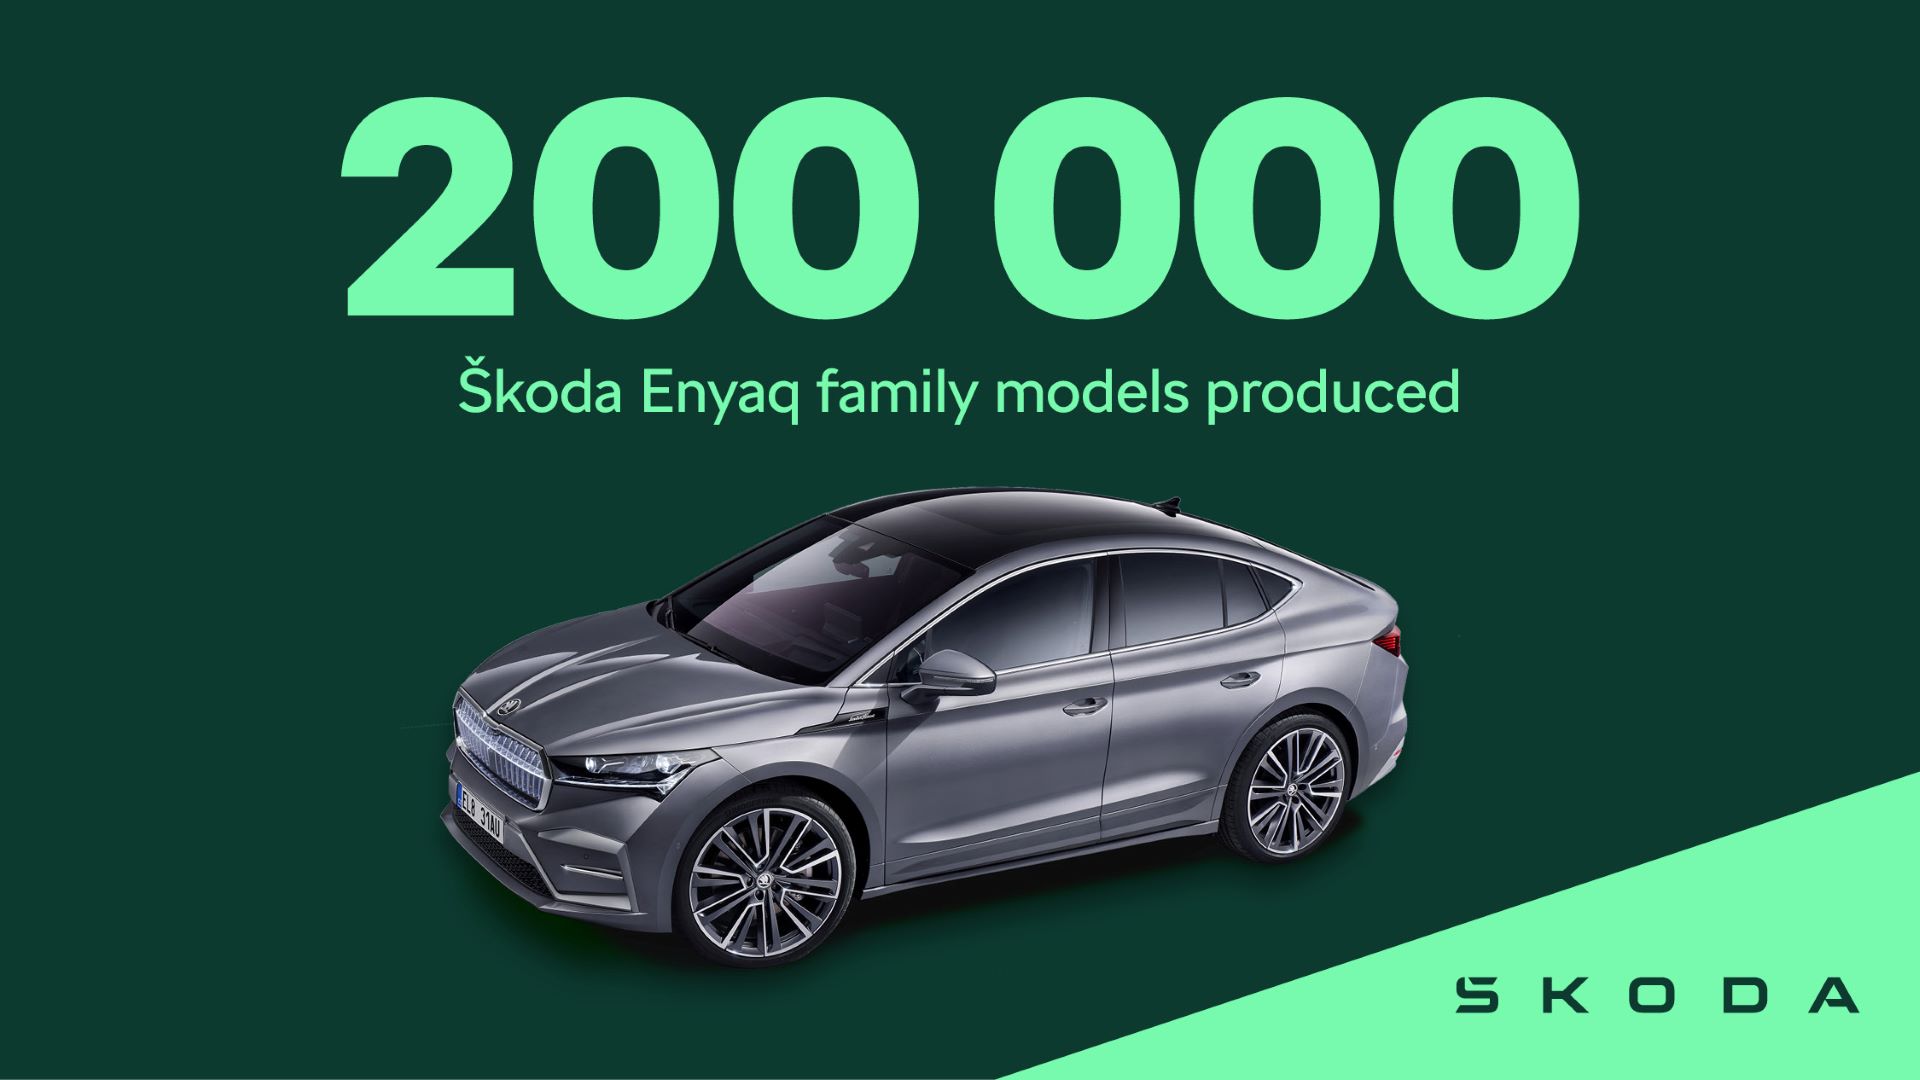 Škoda’s Enyaq family surpasses 200,000 production milestone